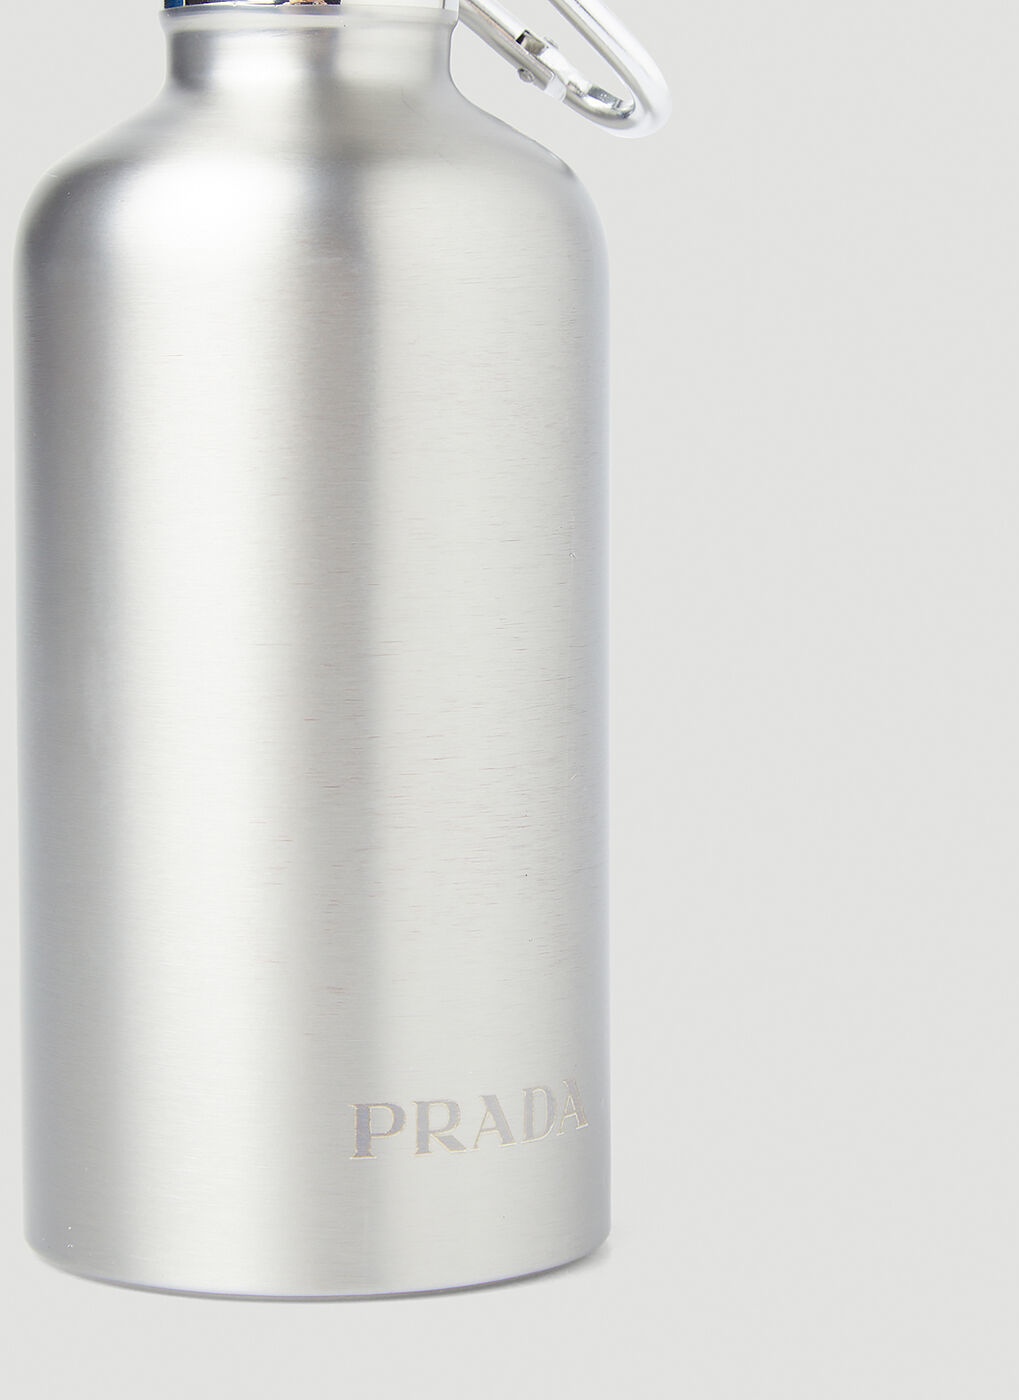 Prada + Stainless steel water bottle, 500 ml